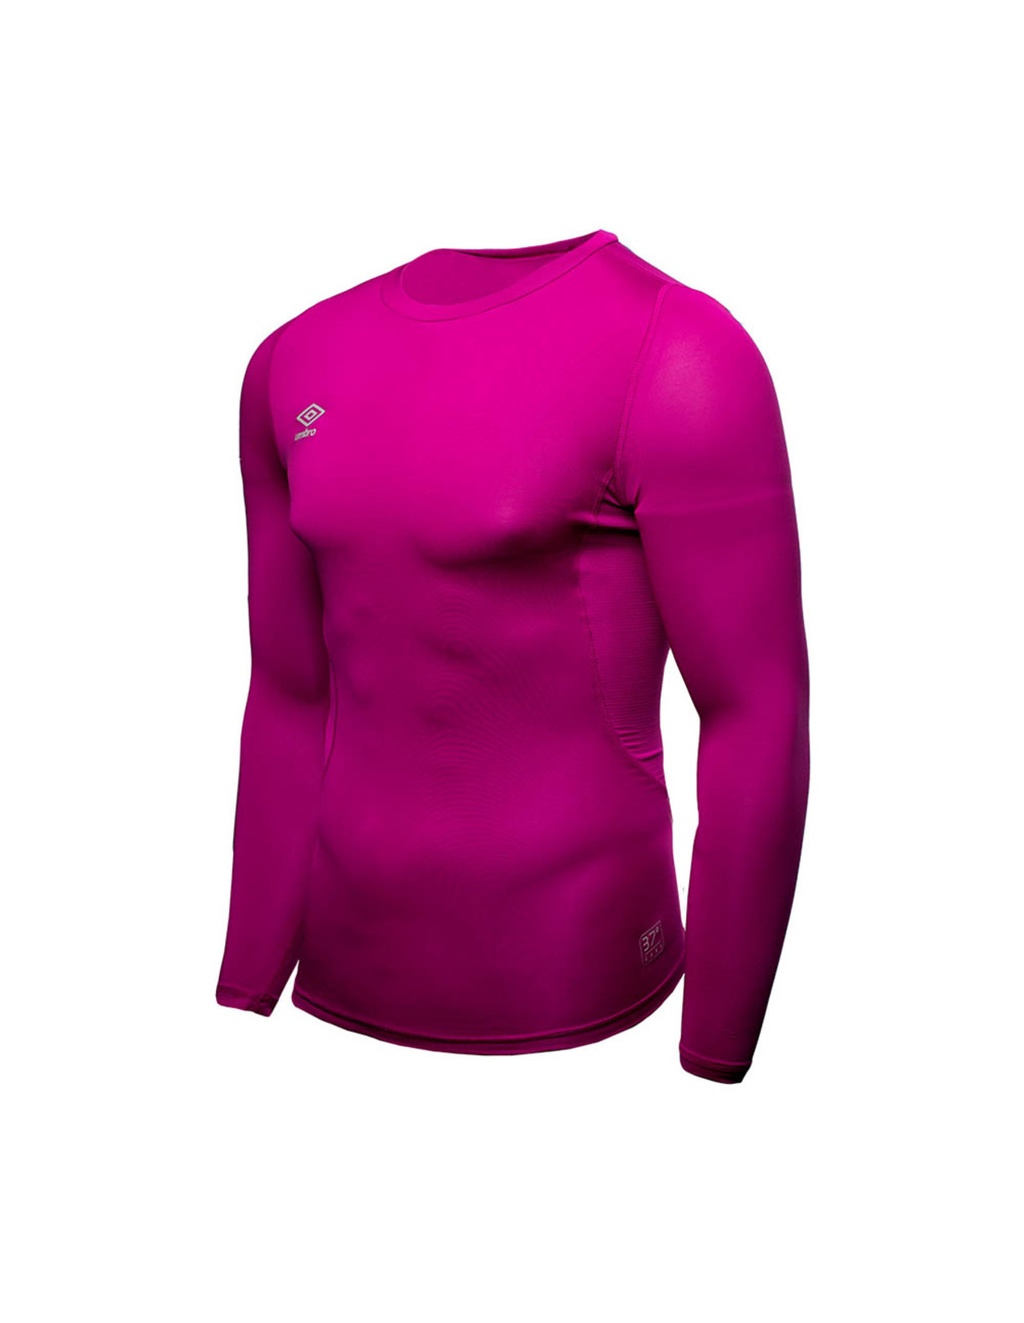 Camiseta deportiva de manga larga para mujer/ropa deportiva 02 - rosa, S